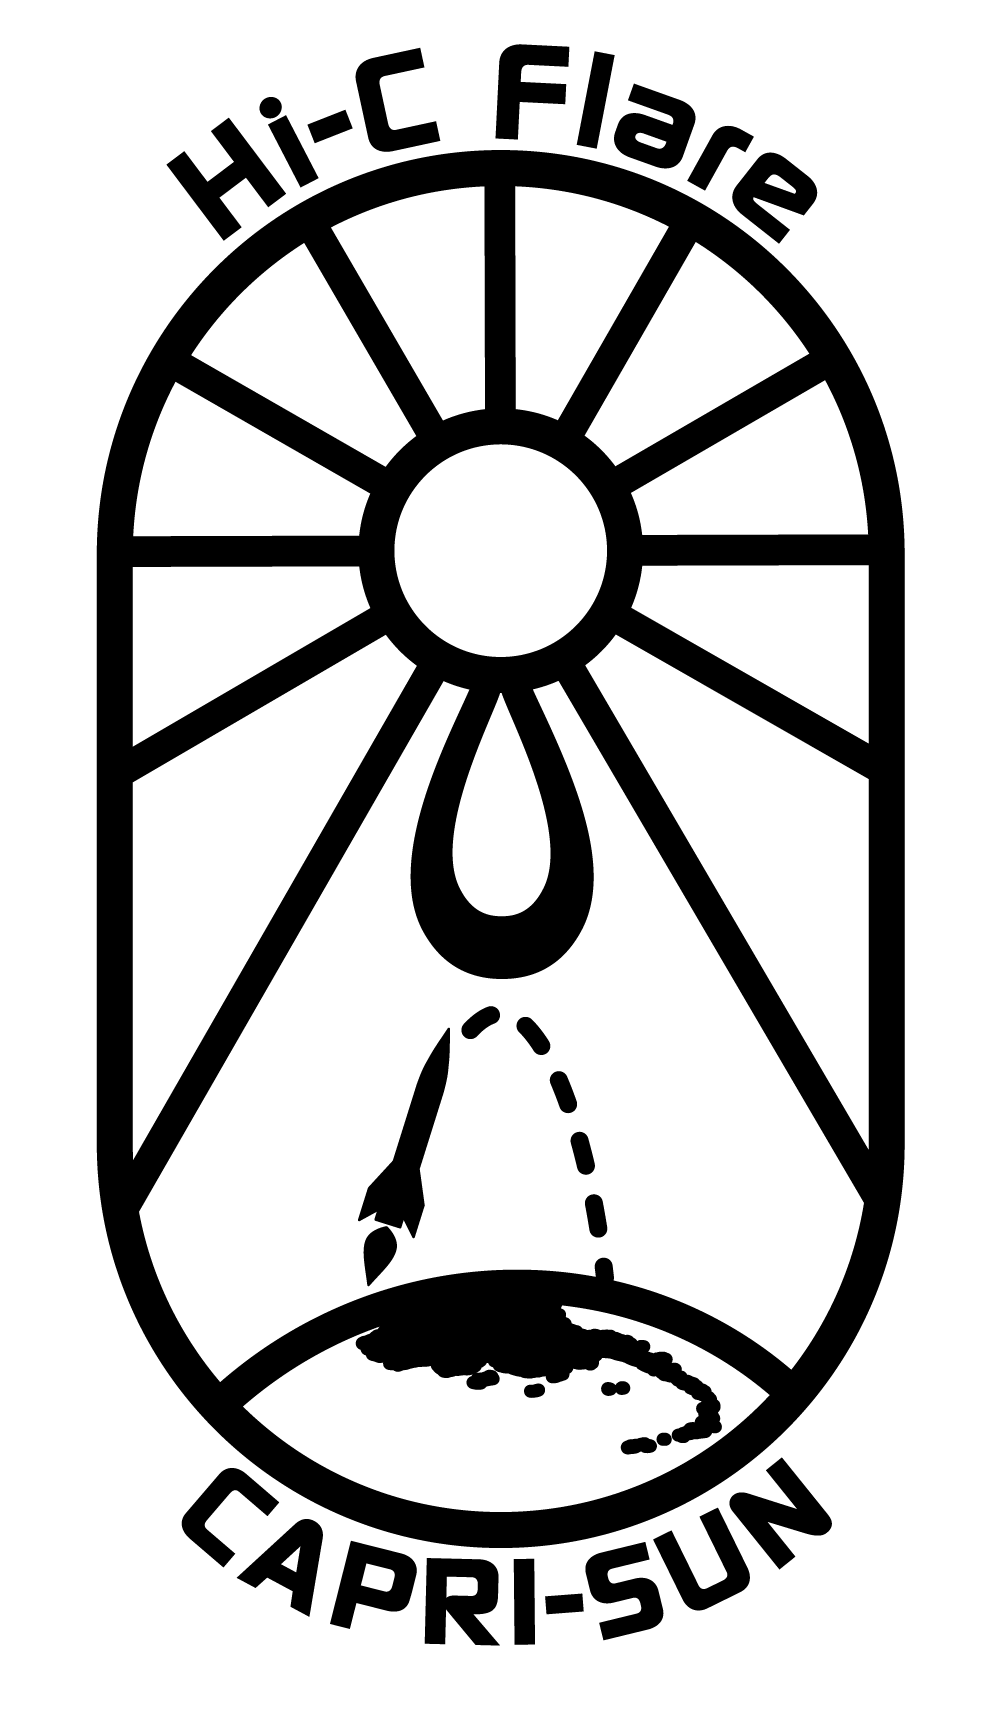 CAPRI-SUN logo showing a sounding rocket arcing towards a solar flare